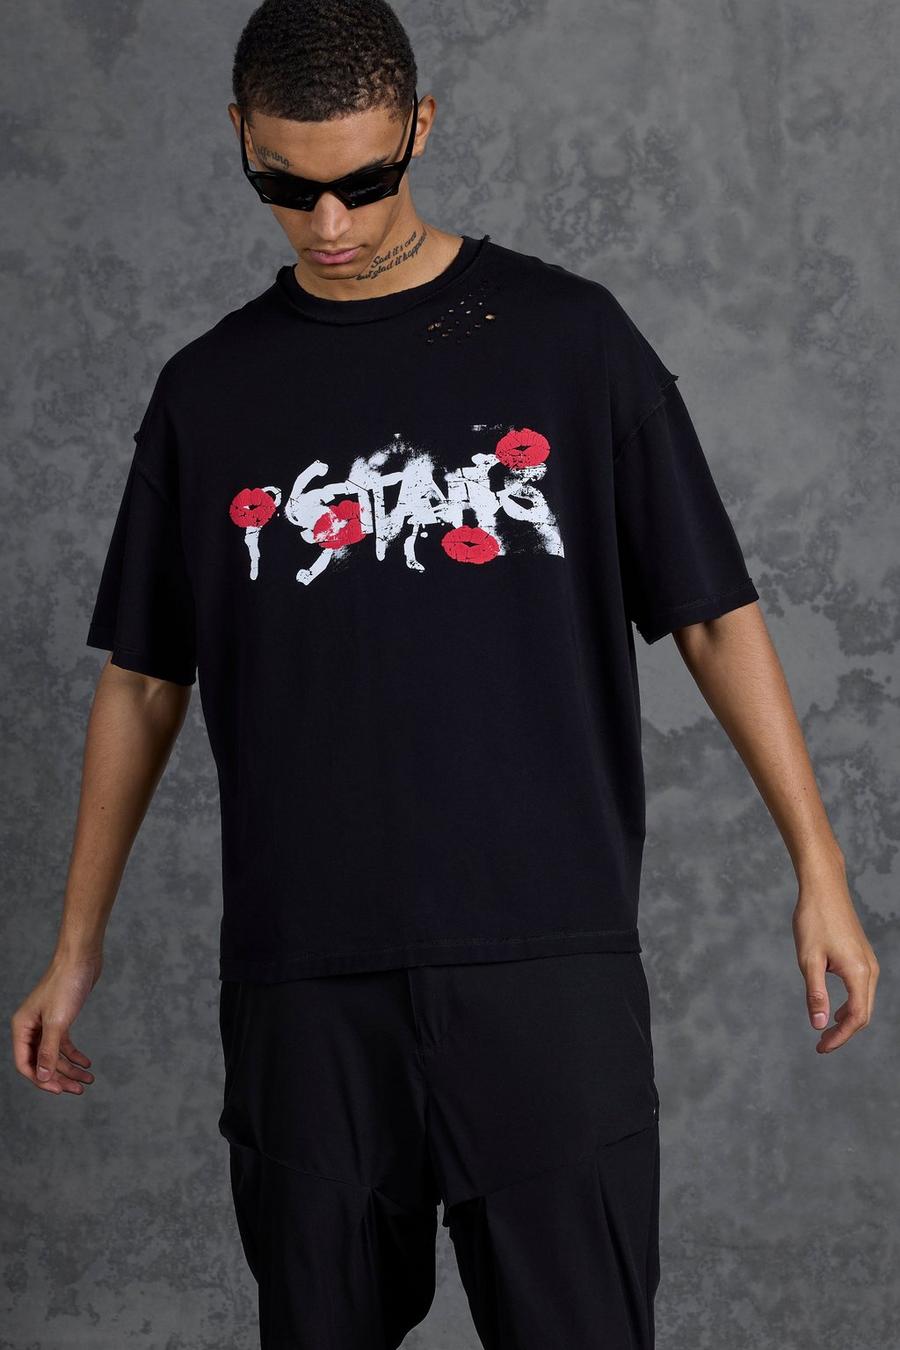 Gunna - Kurzes T-Shirt mit Lippenprint, Black